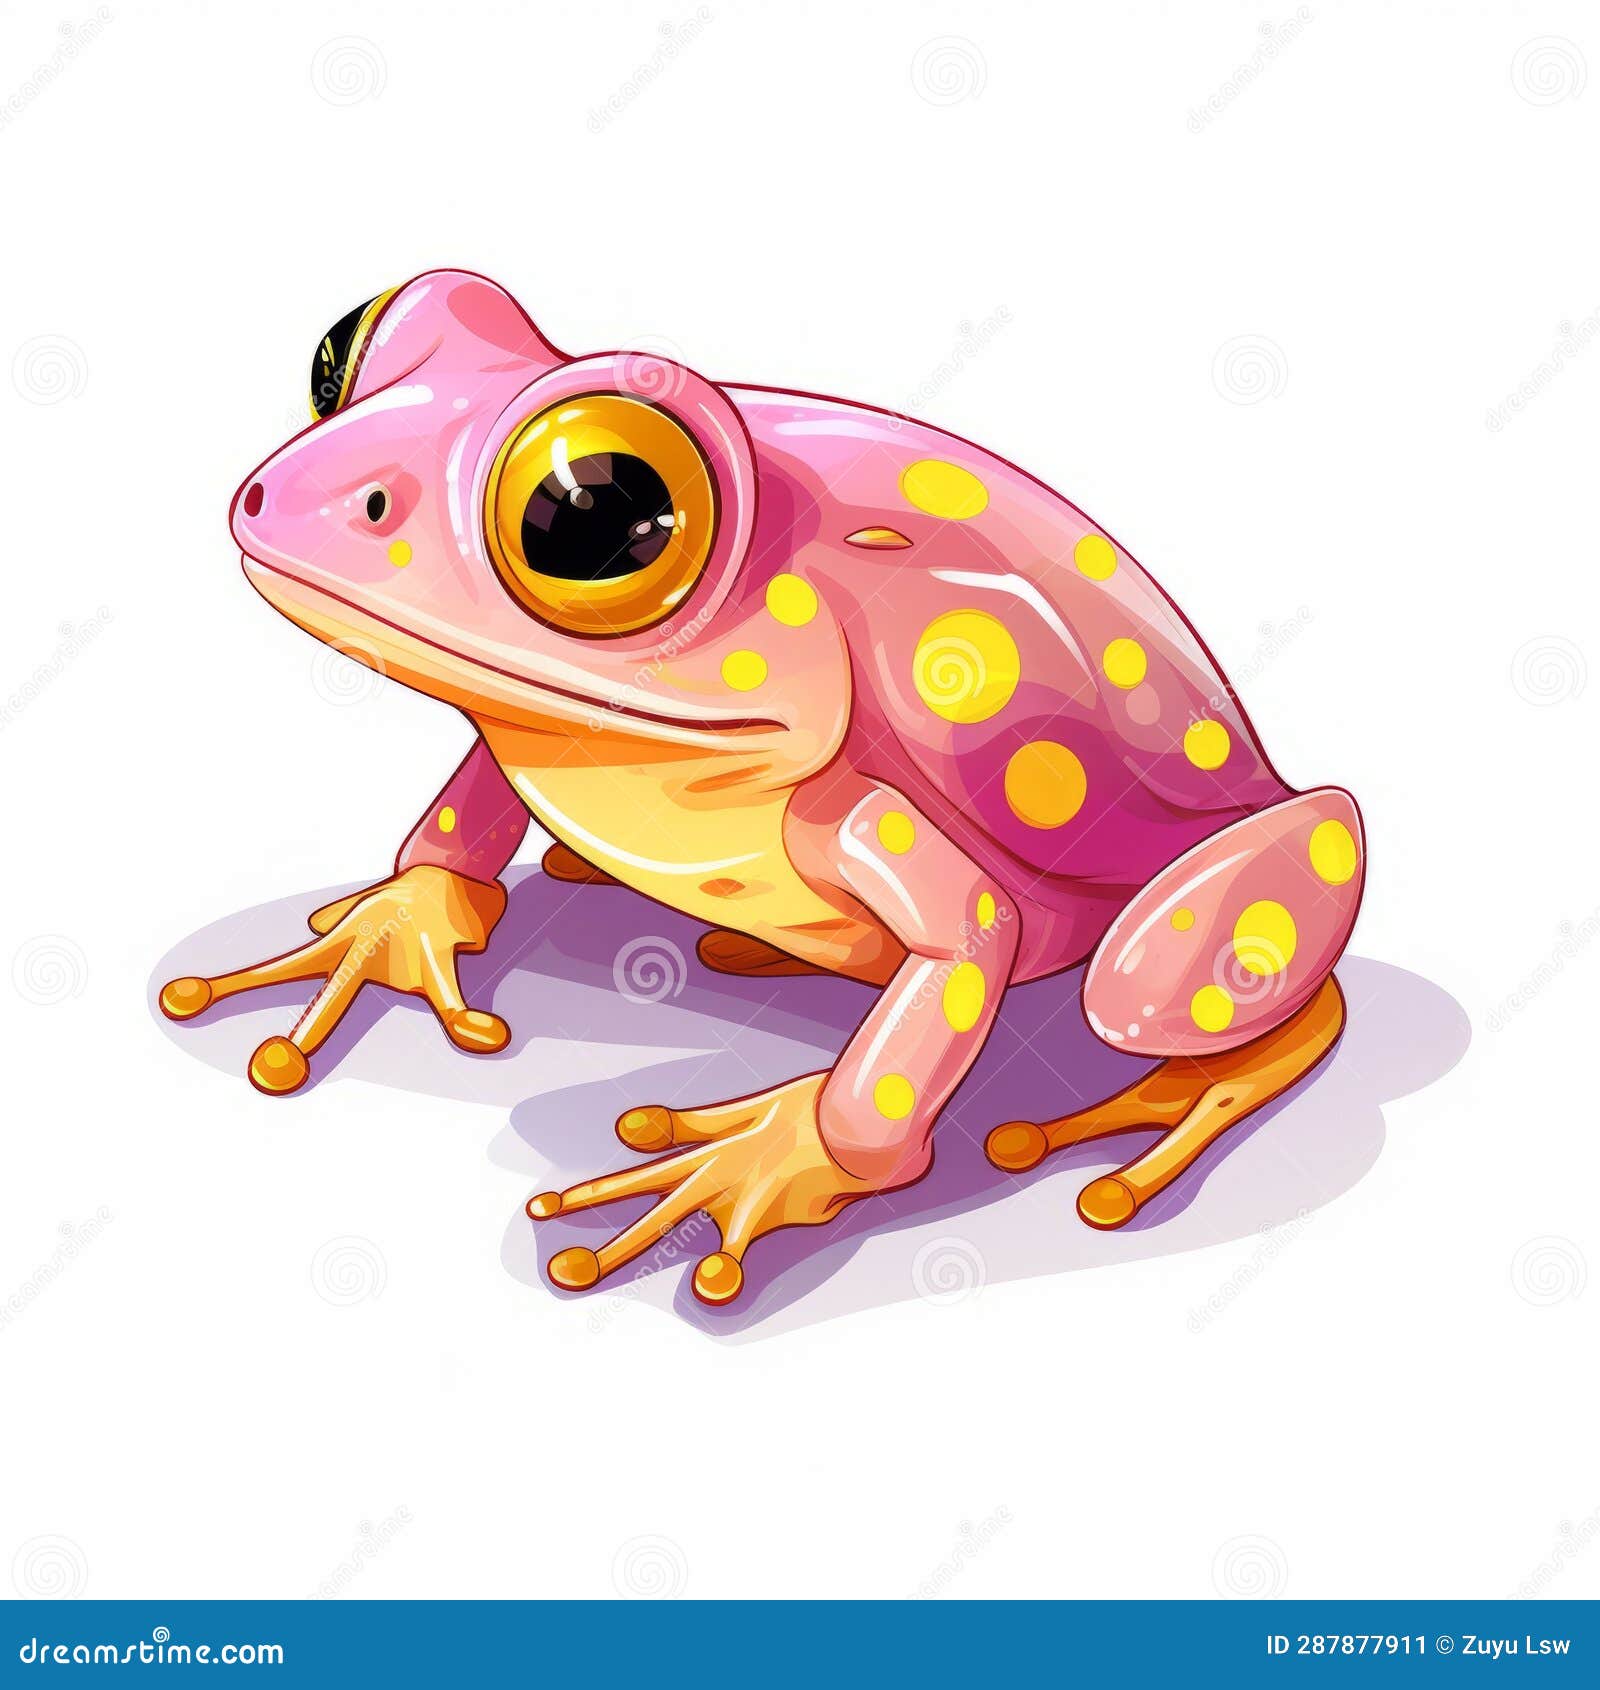 Pink Frog with Yellow Dot Skin Pattern Sitting, Hand-drawn Cartoon  Illustration Stock Illustration - Illustration of yellow, clip: 287877911